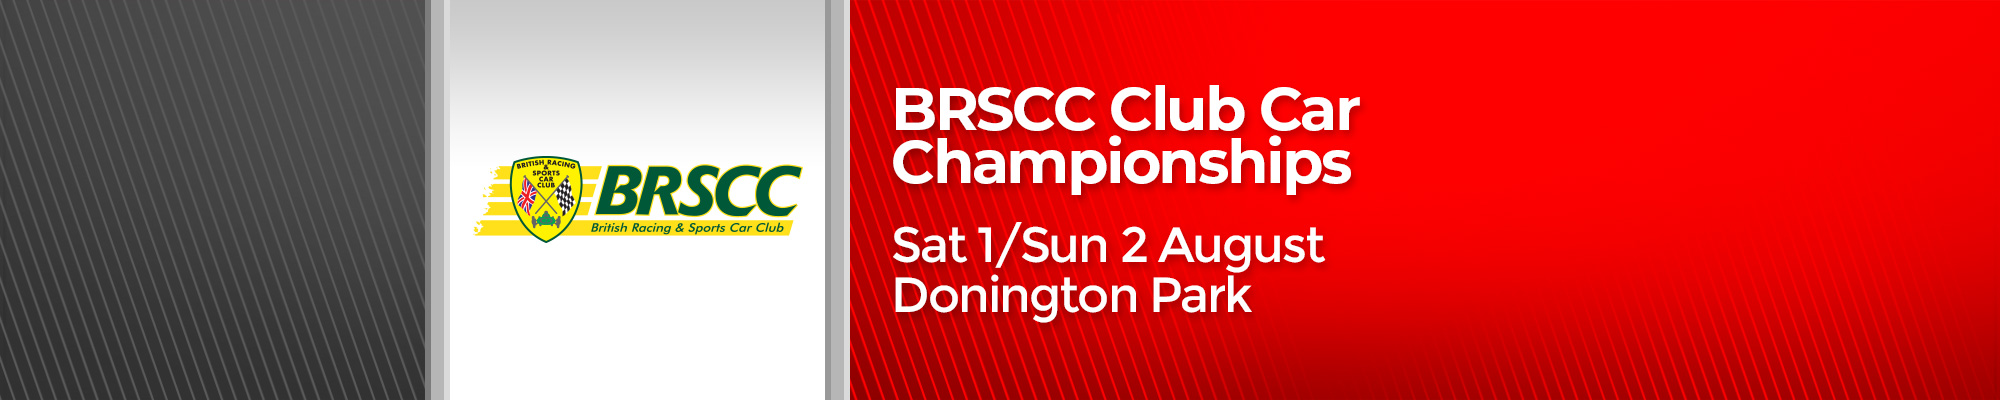  BRSCC Club Car Championships